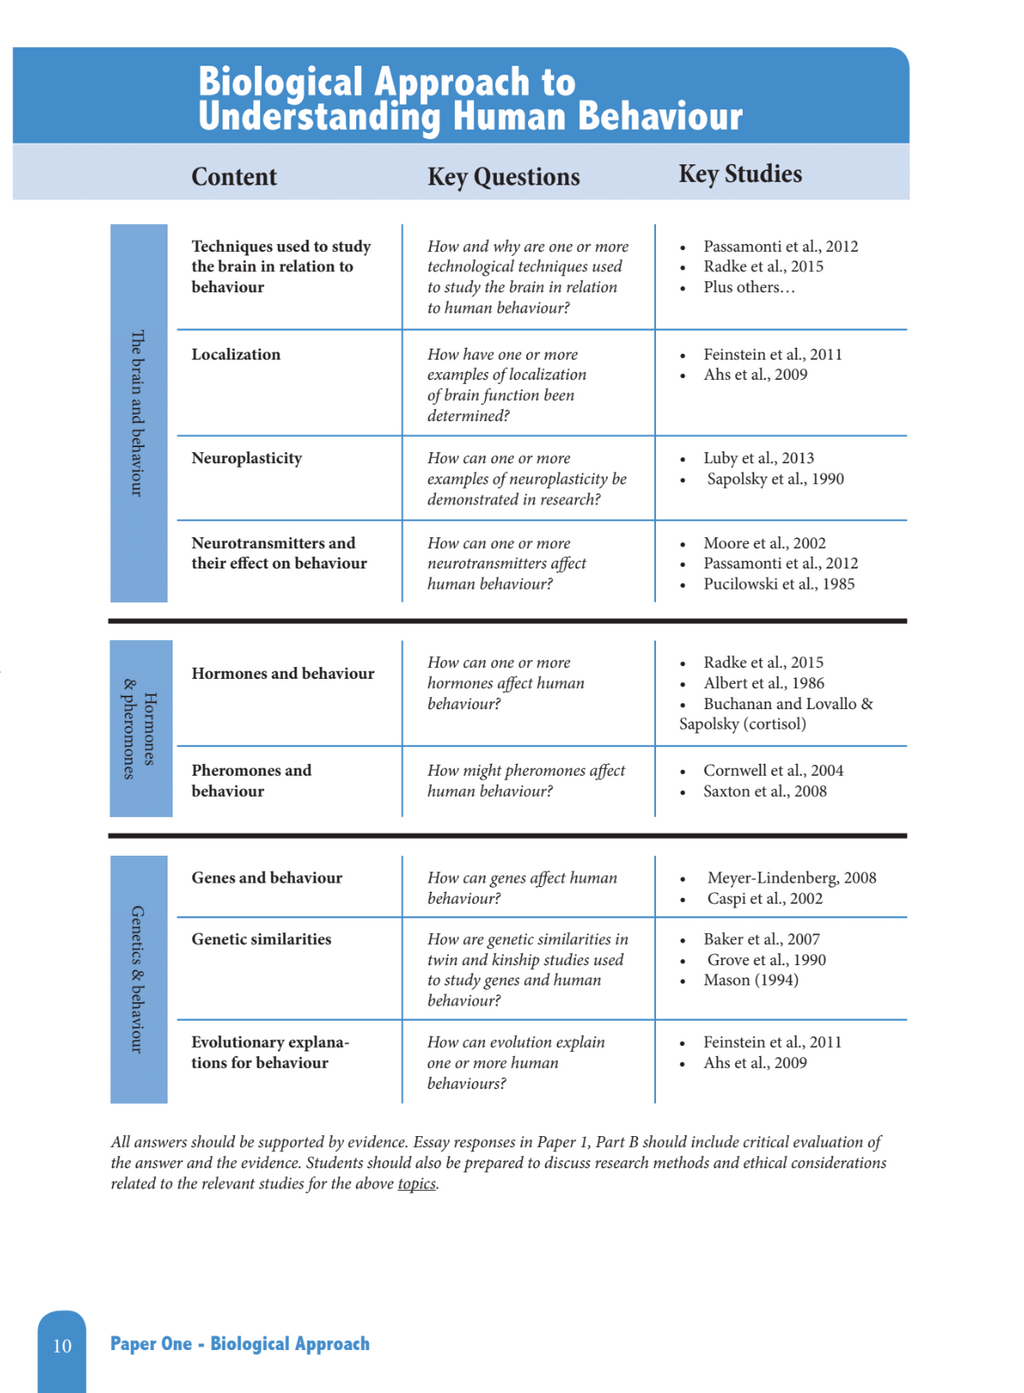 case study characteristics ib psychology